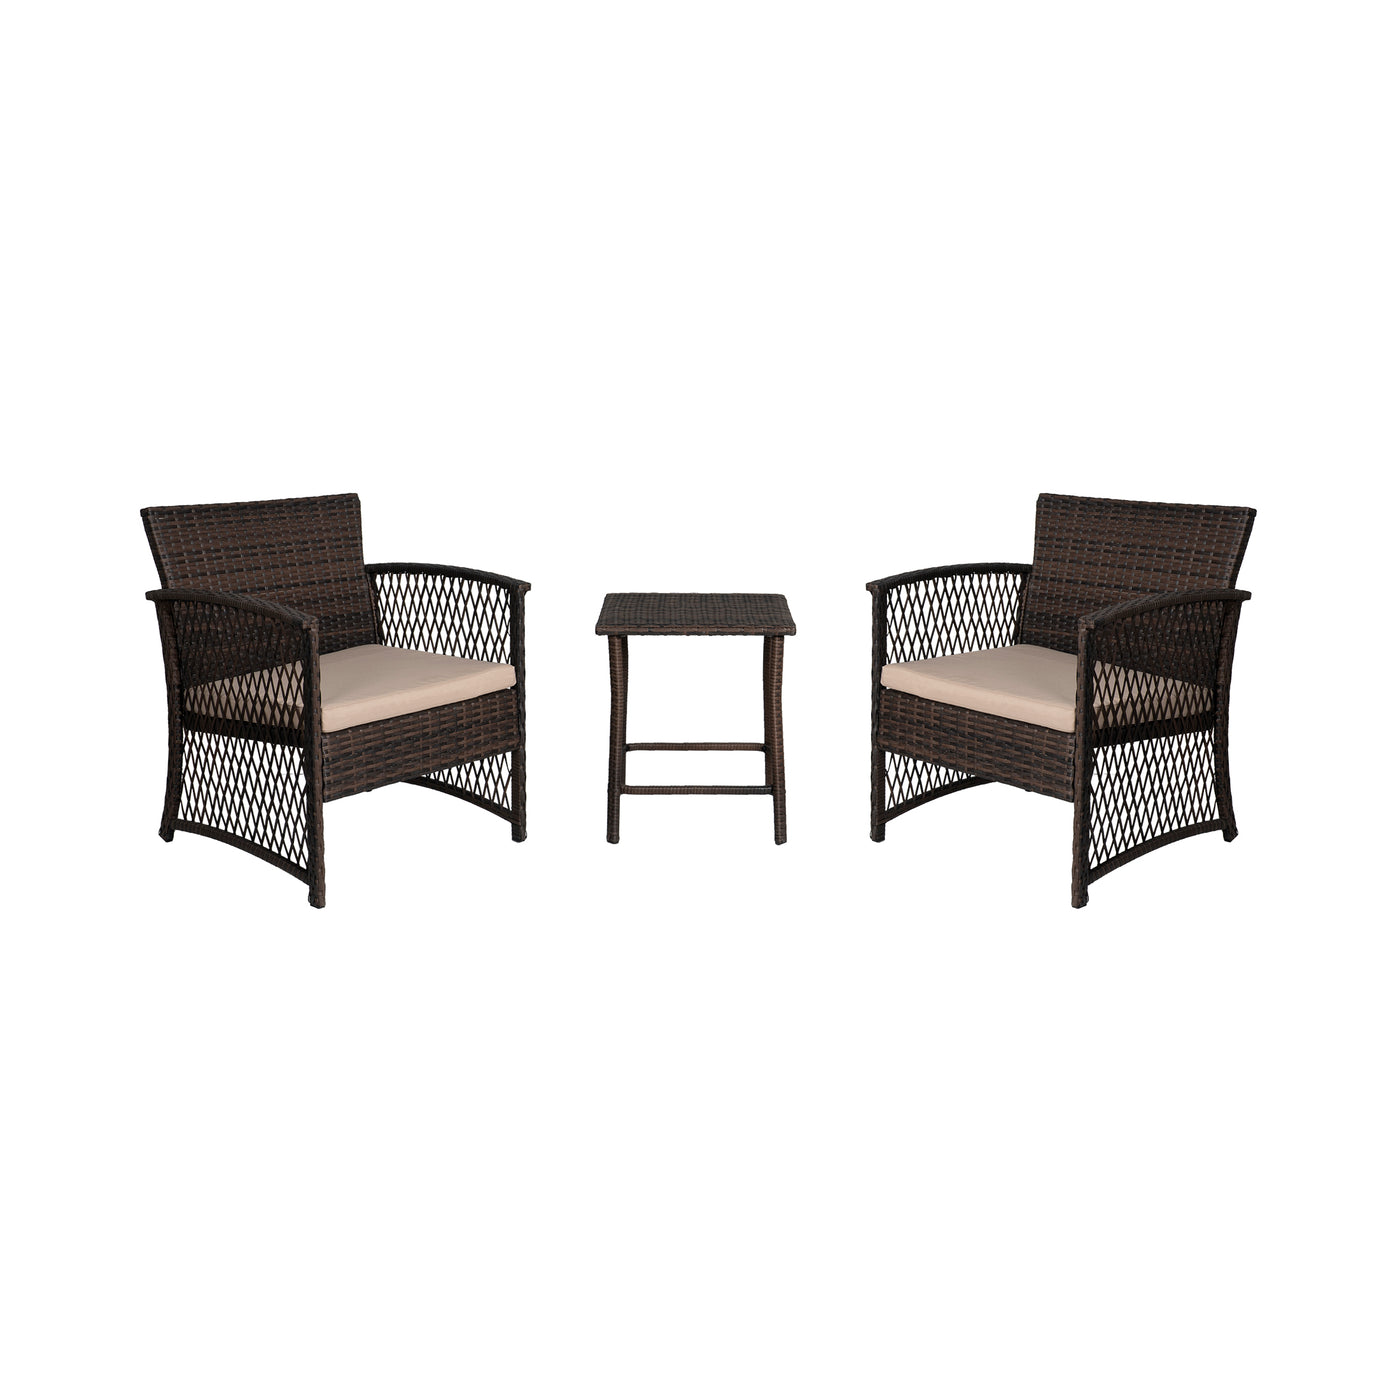 Melvi 3-Piece Outdoor Patio Wicker Conversation Set, Coffee